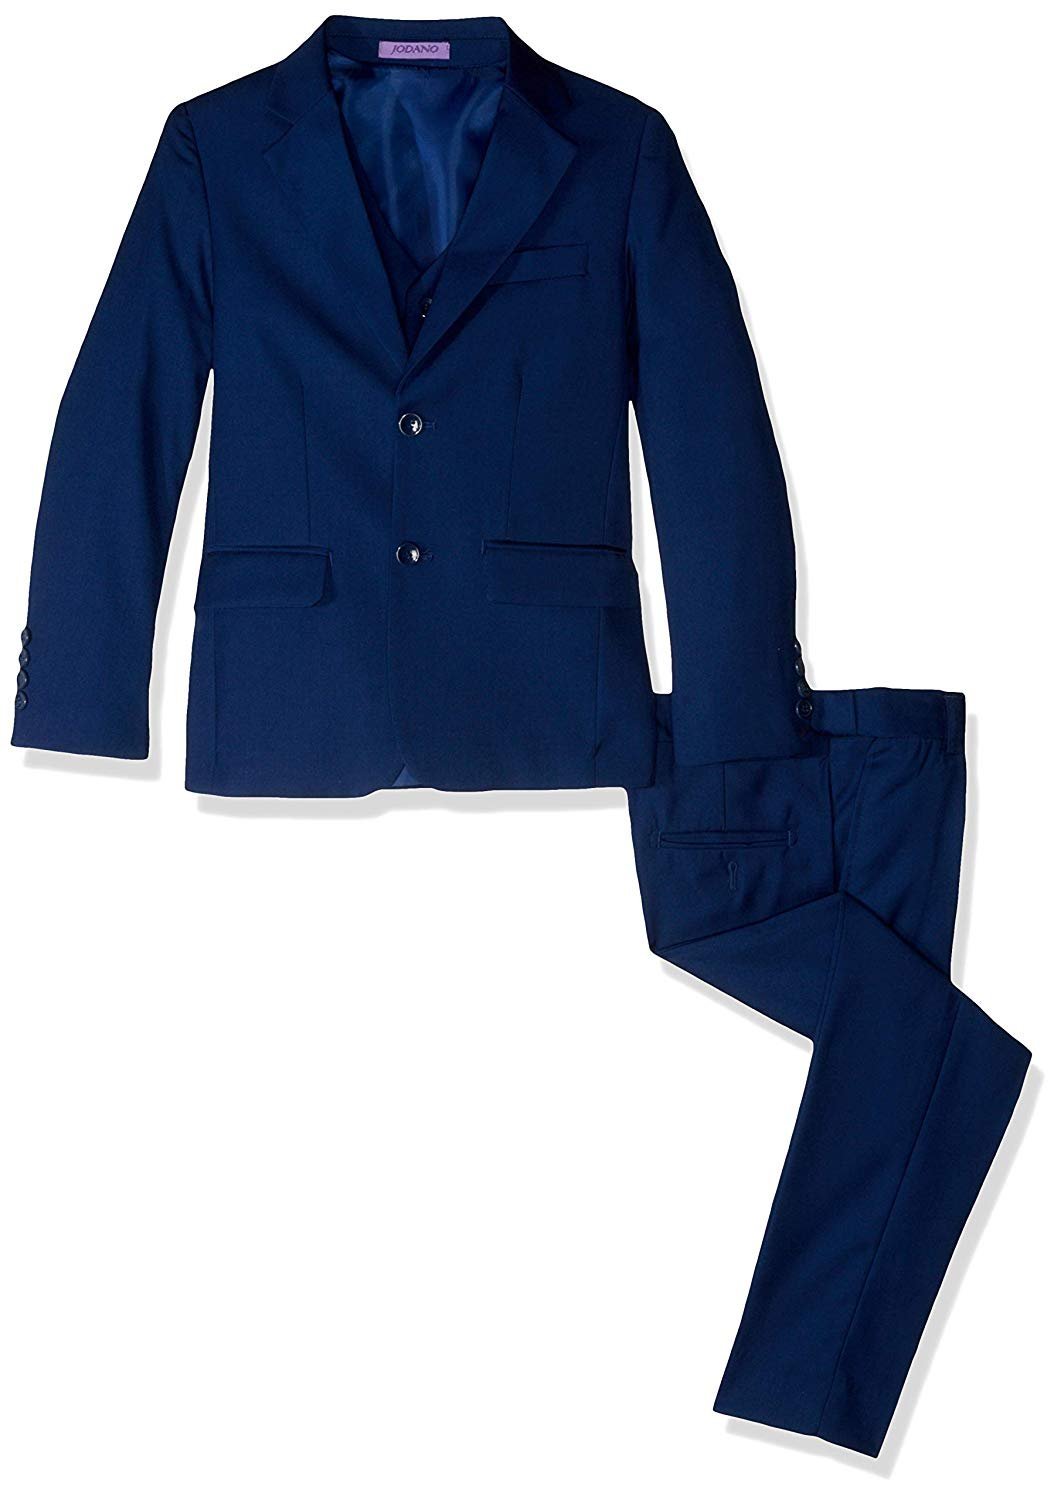 Jodano Boy's Formal 3 Piece (Jacket Vest Pants) Natural Stretch Slim Fit Dress Suit Set